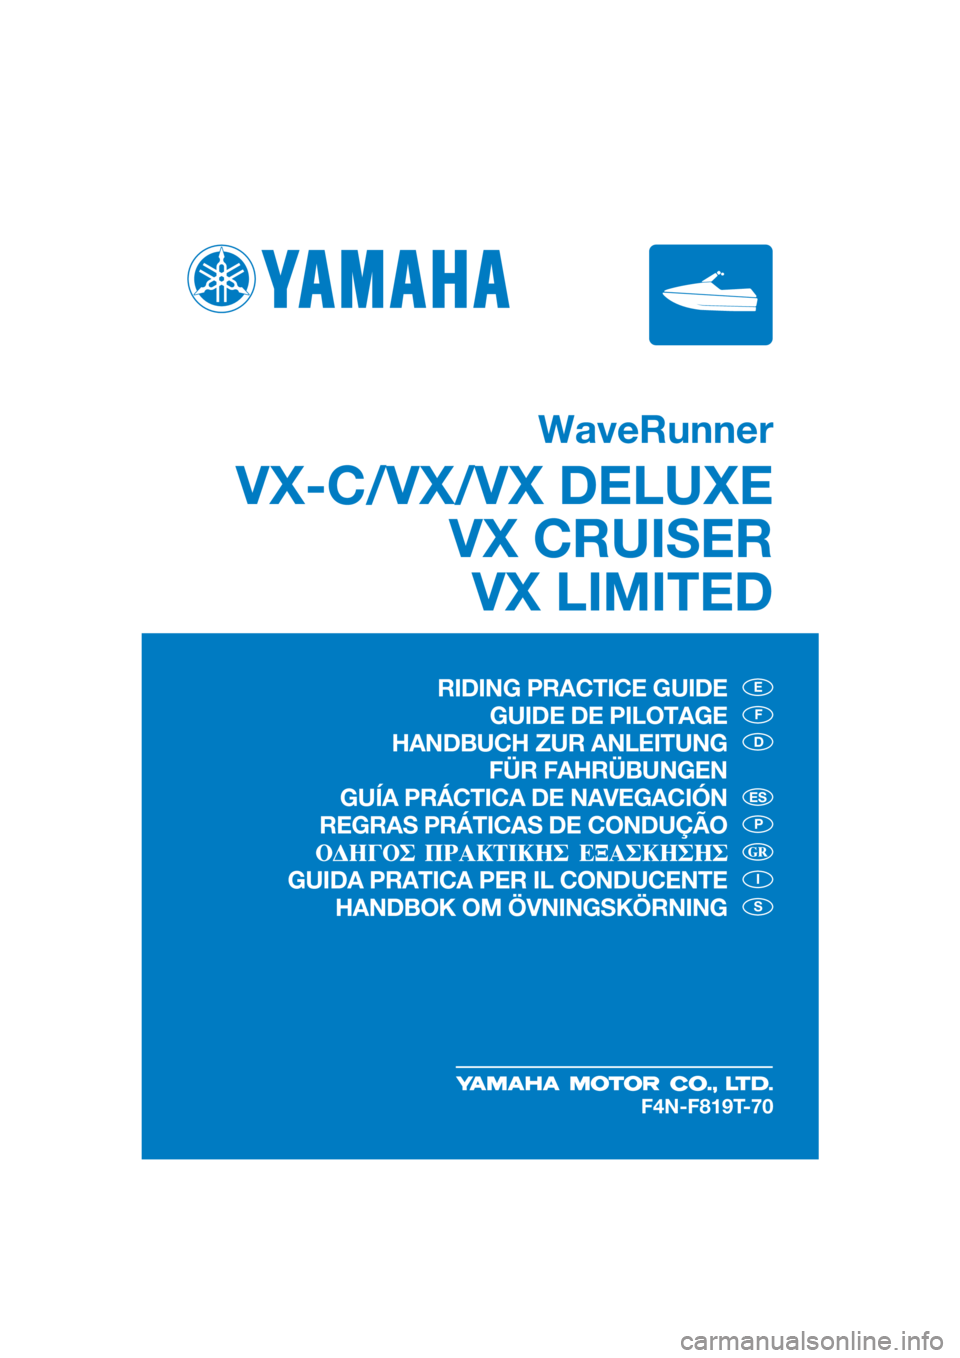 YAMAHA VX-C 2021  Owners Manual WaveRunner
VX-C/VX/VX DELUXEVX CRUISERVX LIMITED
E
F
D
P
I
S
ES
F4N-F819T-70
RIDING PRACTICE GUIDE
GUIDE DE PILOTAGE
HANDBUCH ZUR ANLEITUNG  FÜR FAHRÜBUNGEN
GUÍA PRÁCTICA DE NAVEGACIÓN
REGRAS PR�